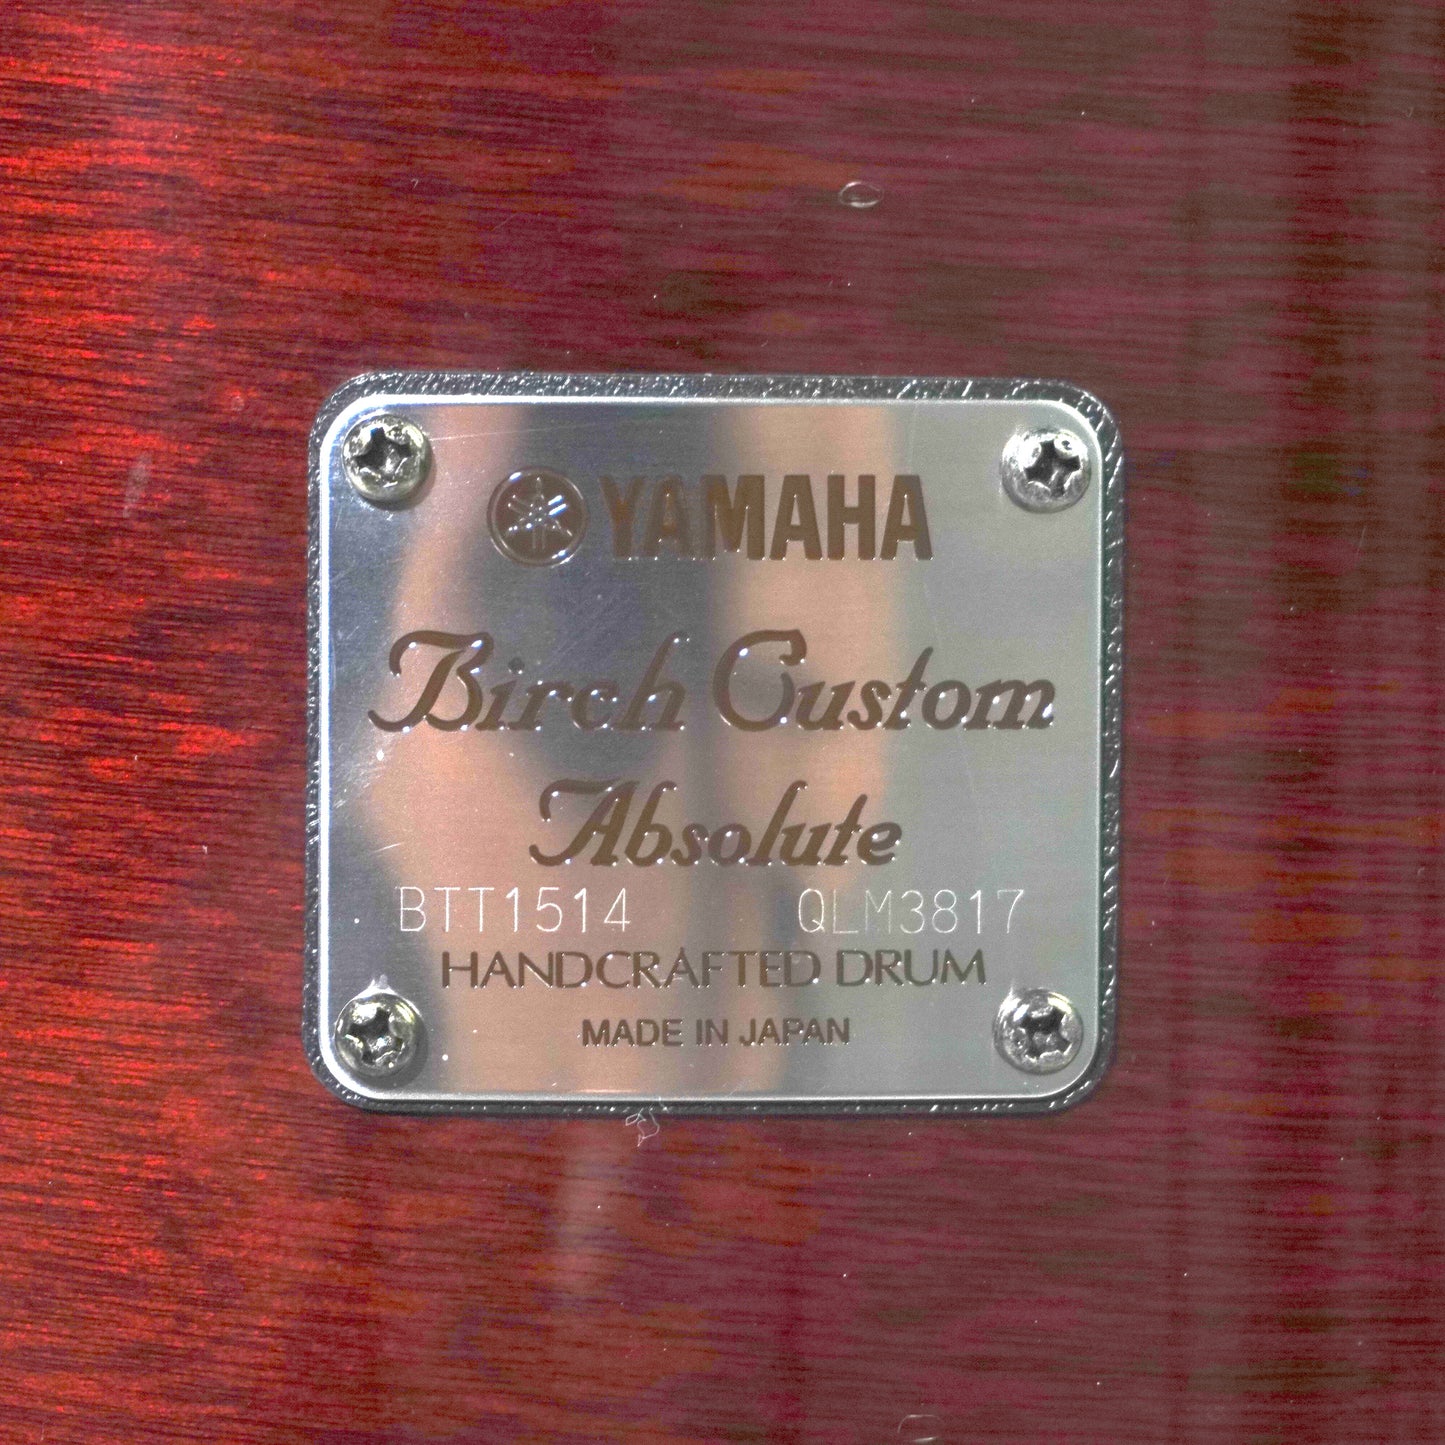 Yamaha 3-Piece Birch Custom Absolute in Cherry Wood Finish